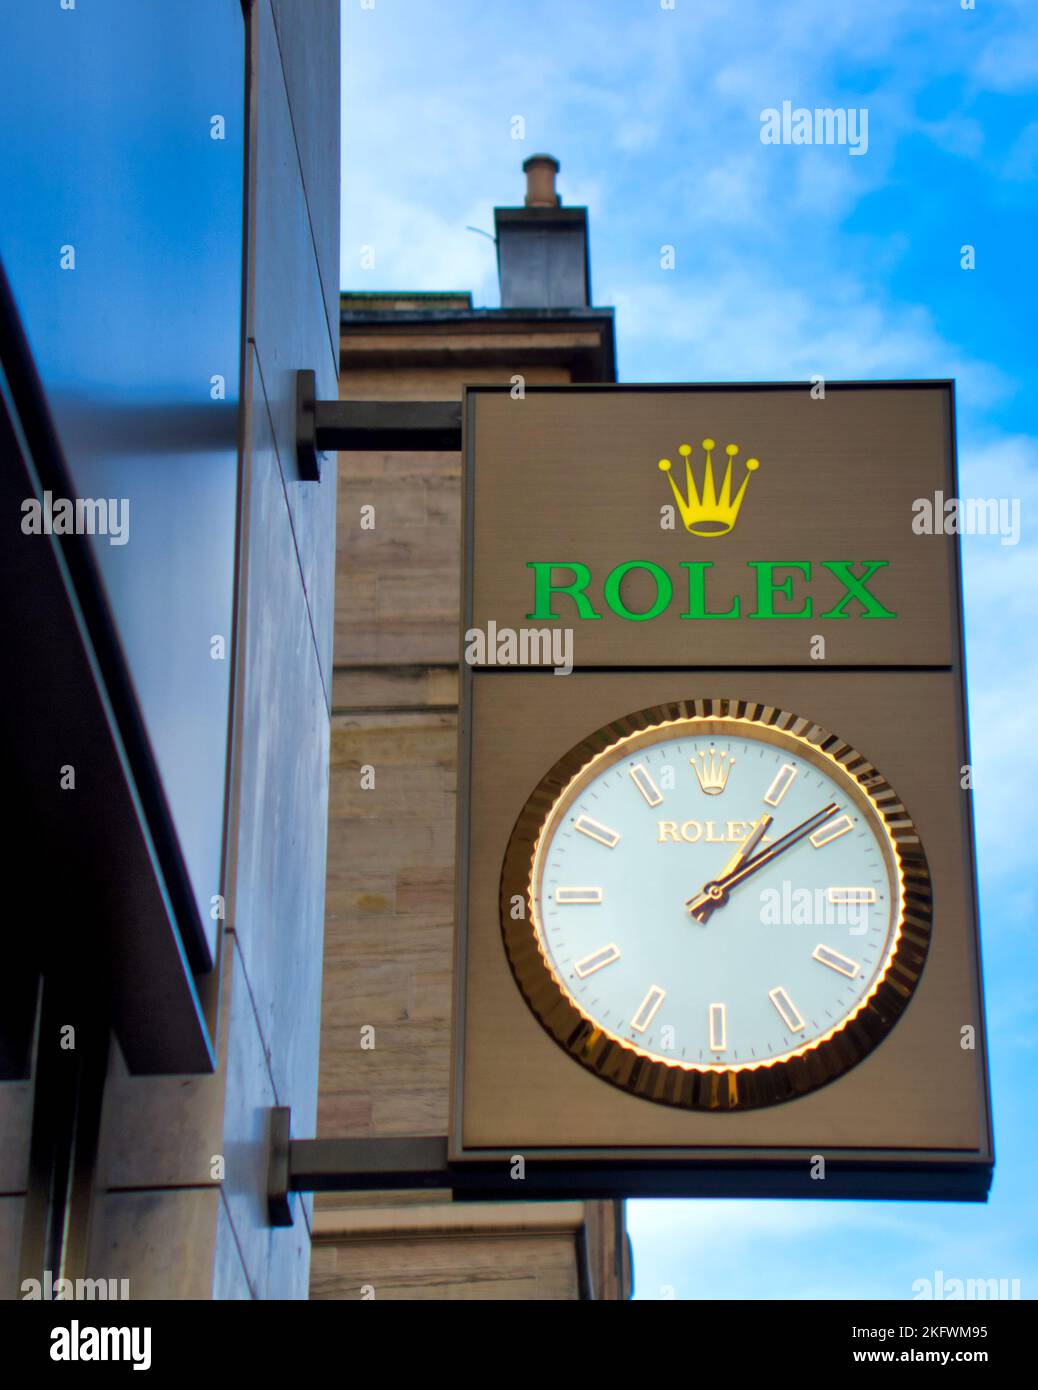 Rolex watch clock shop sign Stock Photo